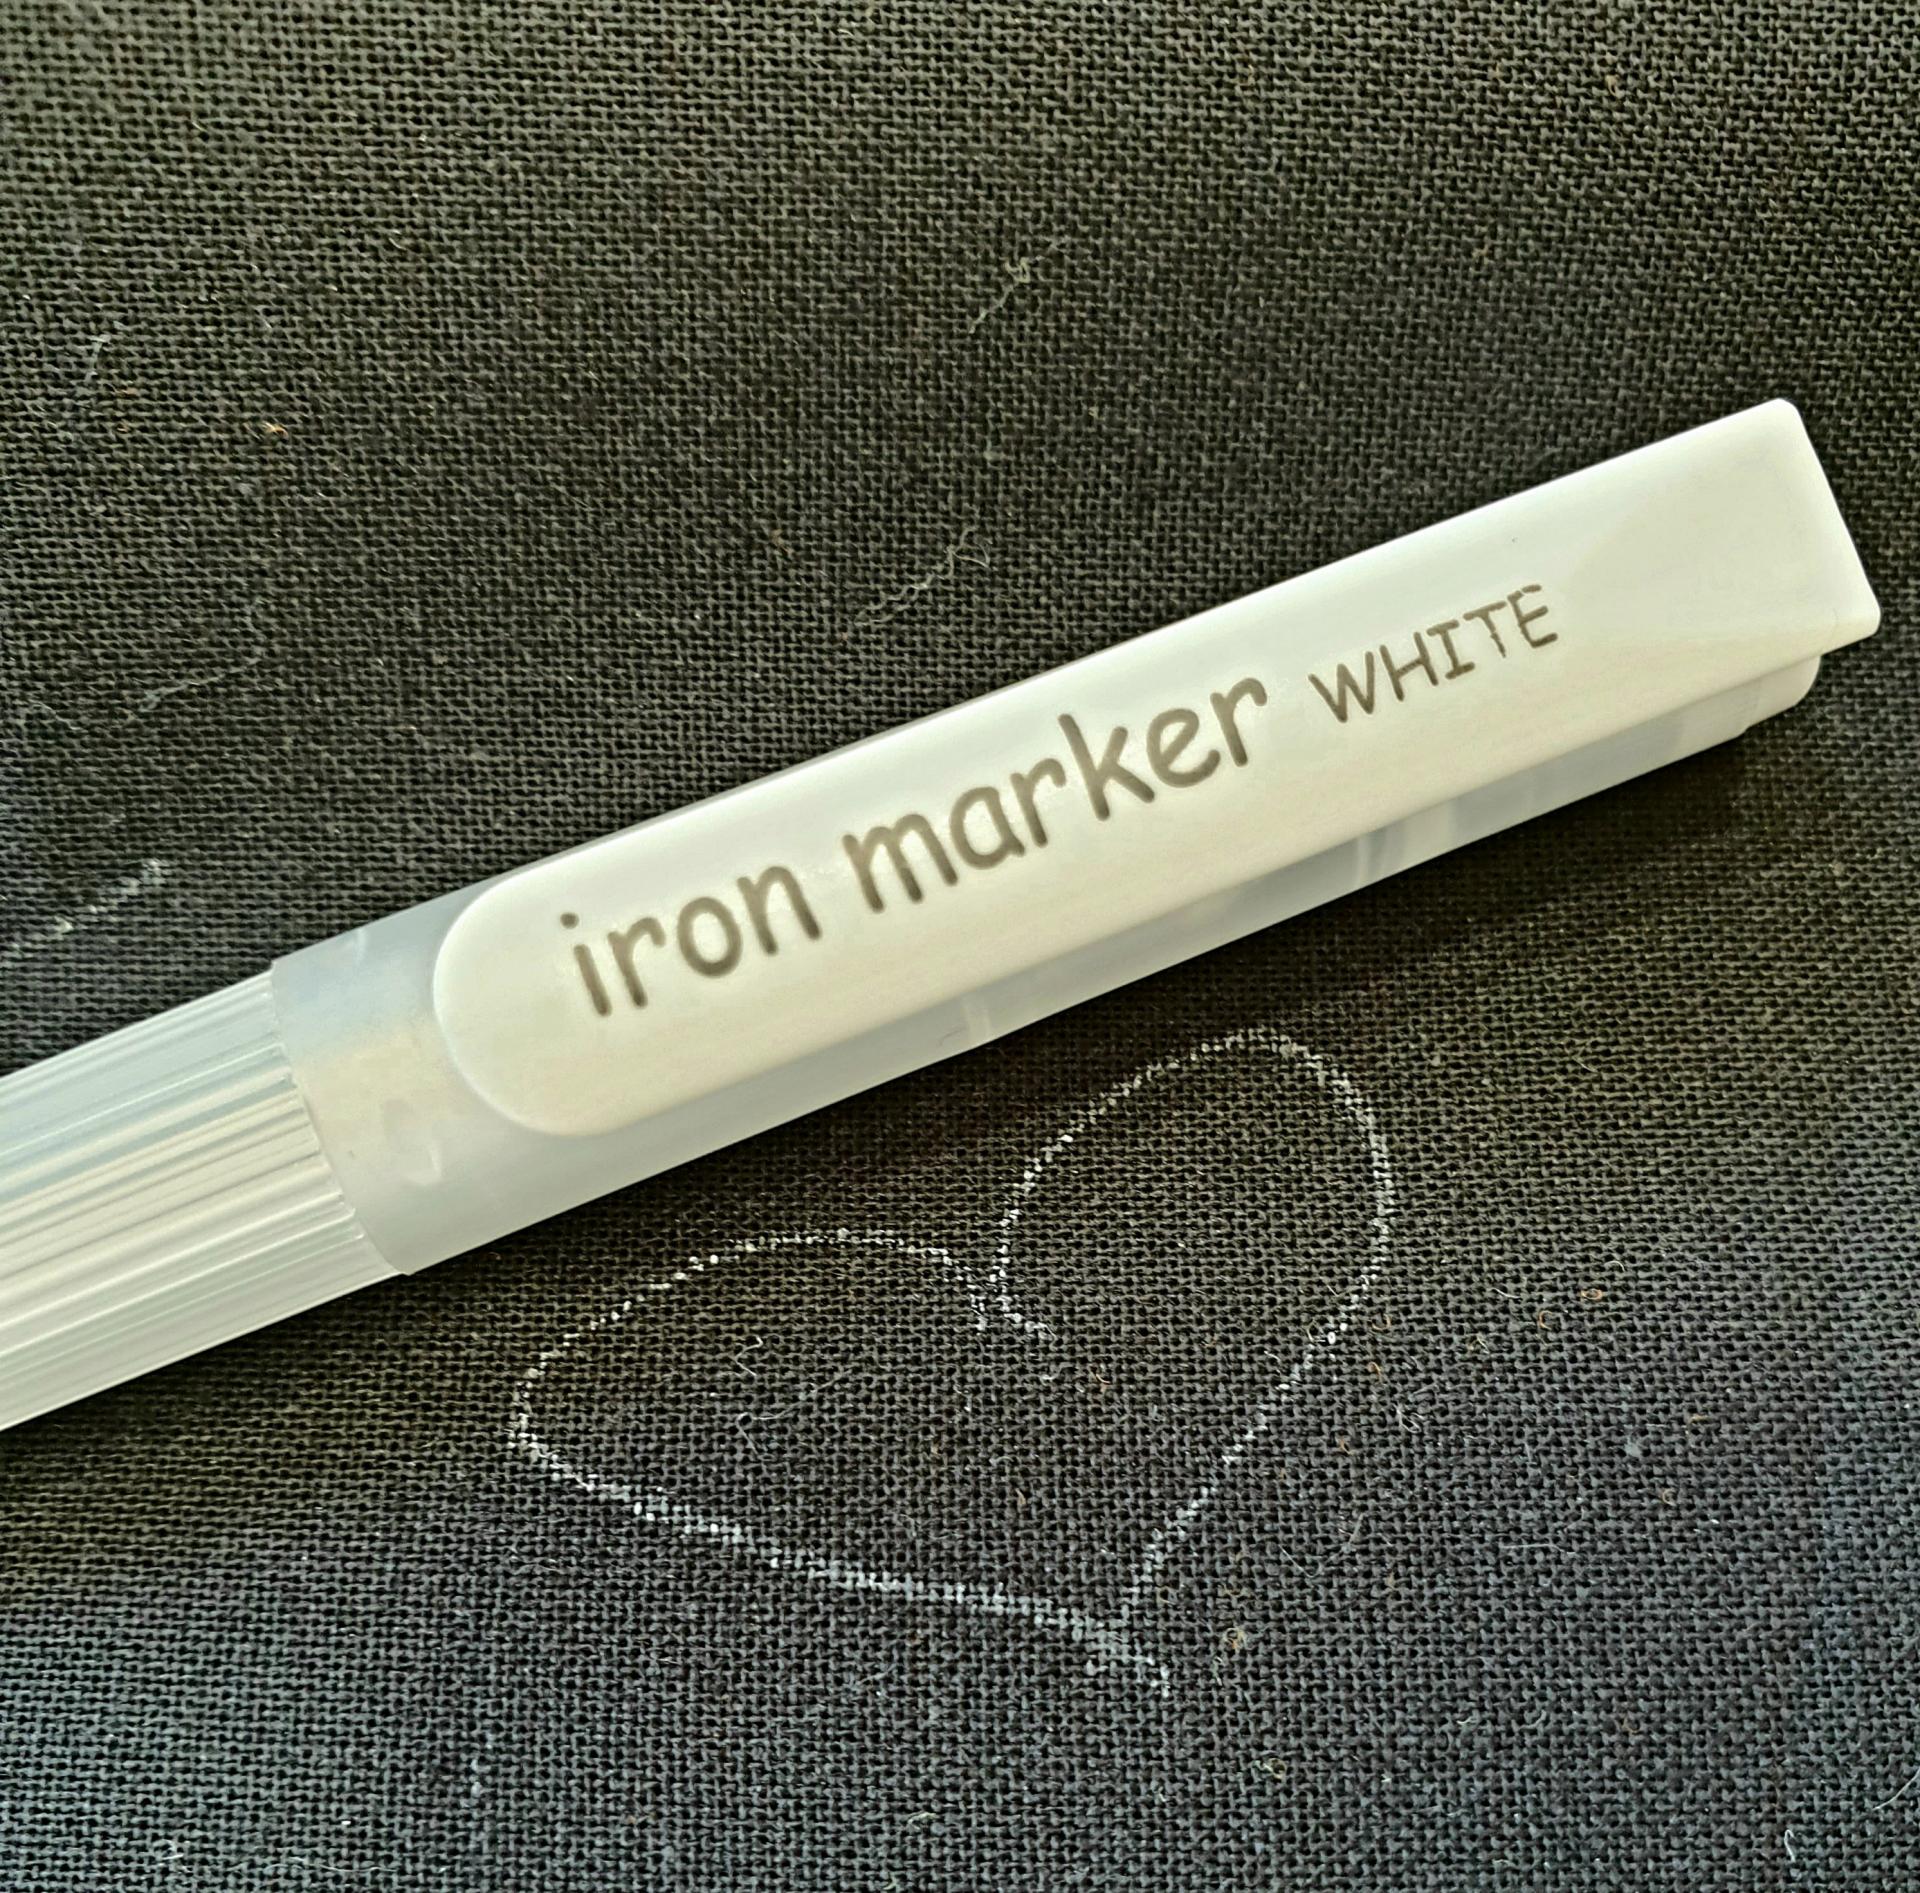 Marcador Premium de tela blanco - Iron Marker